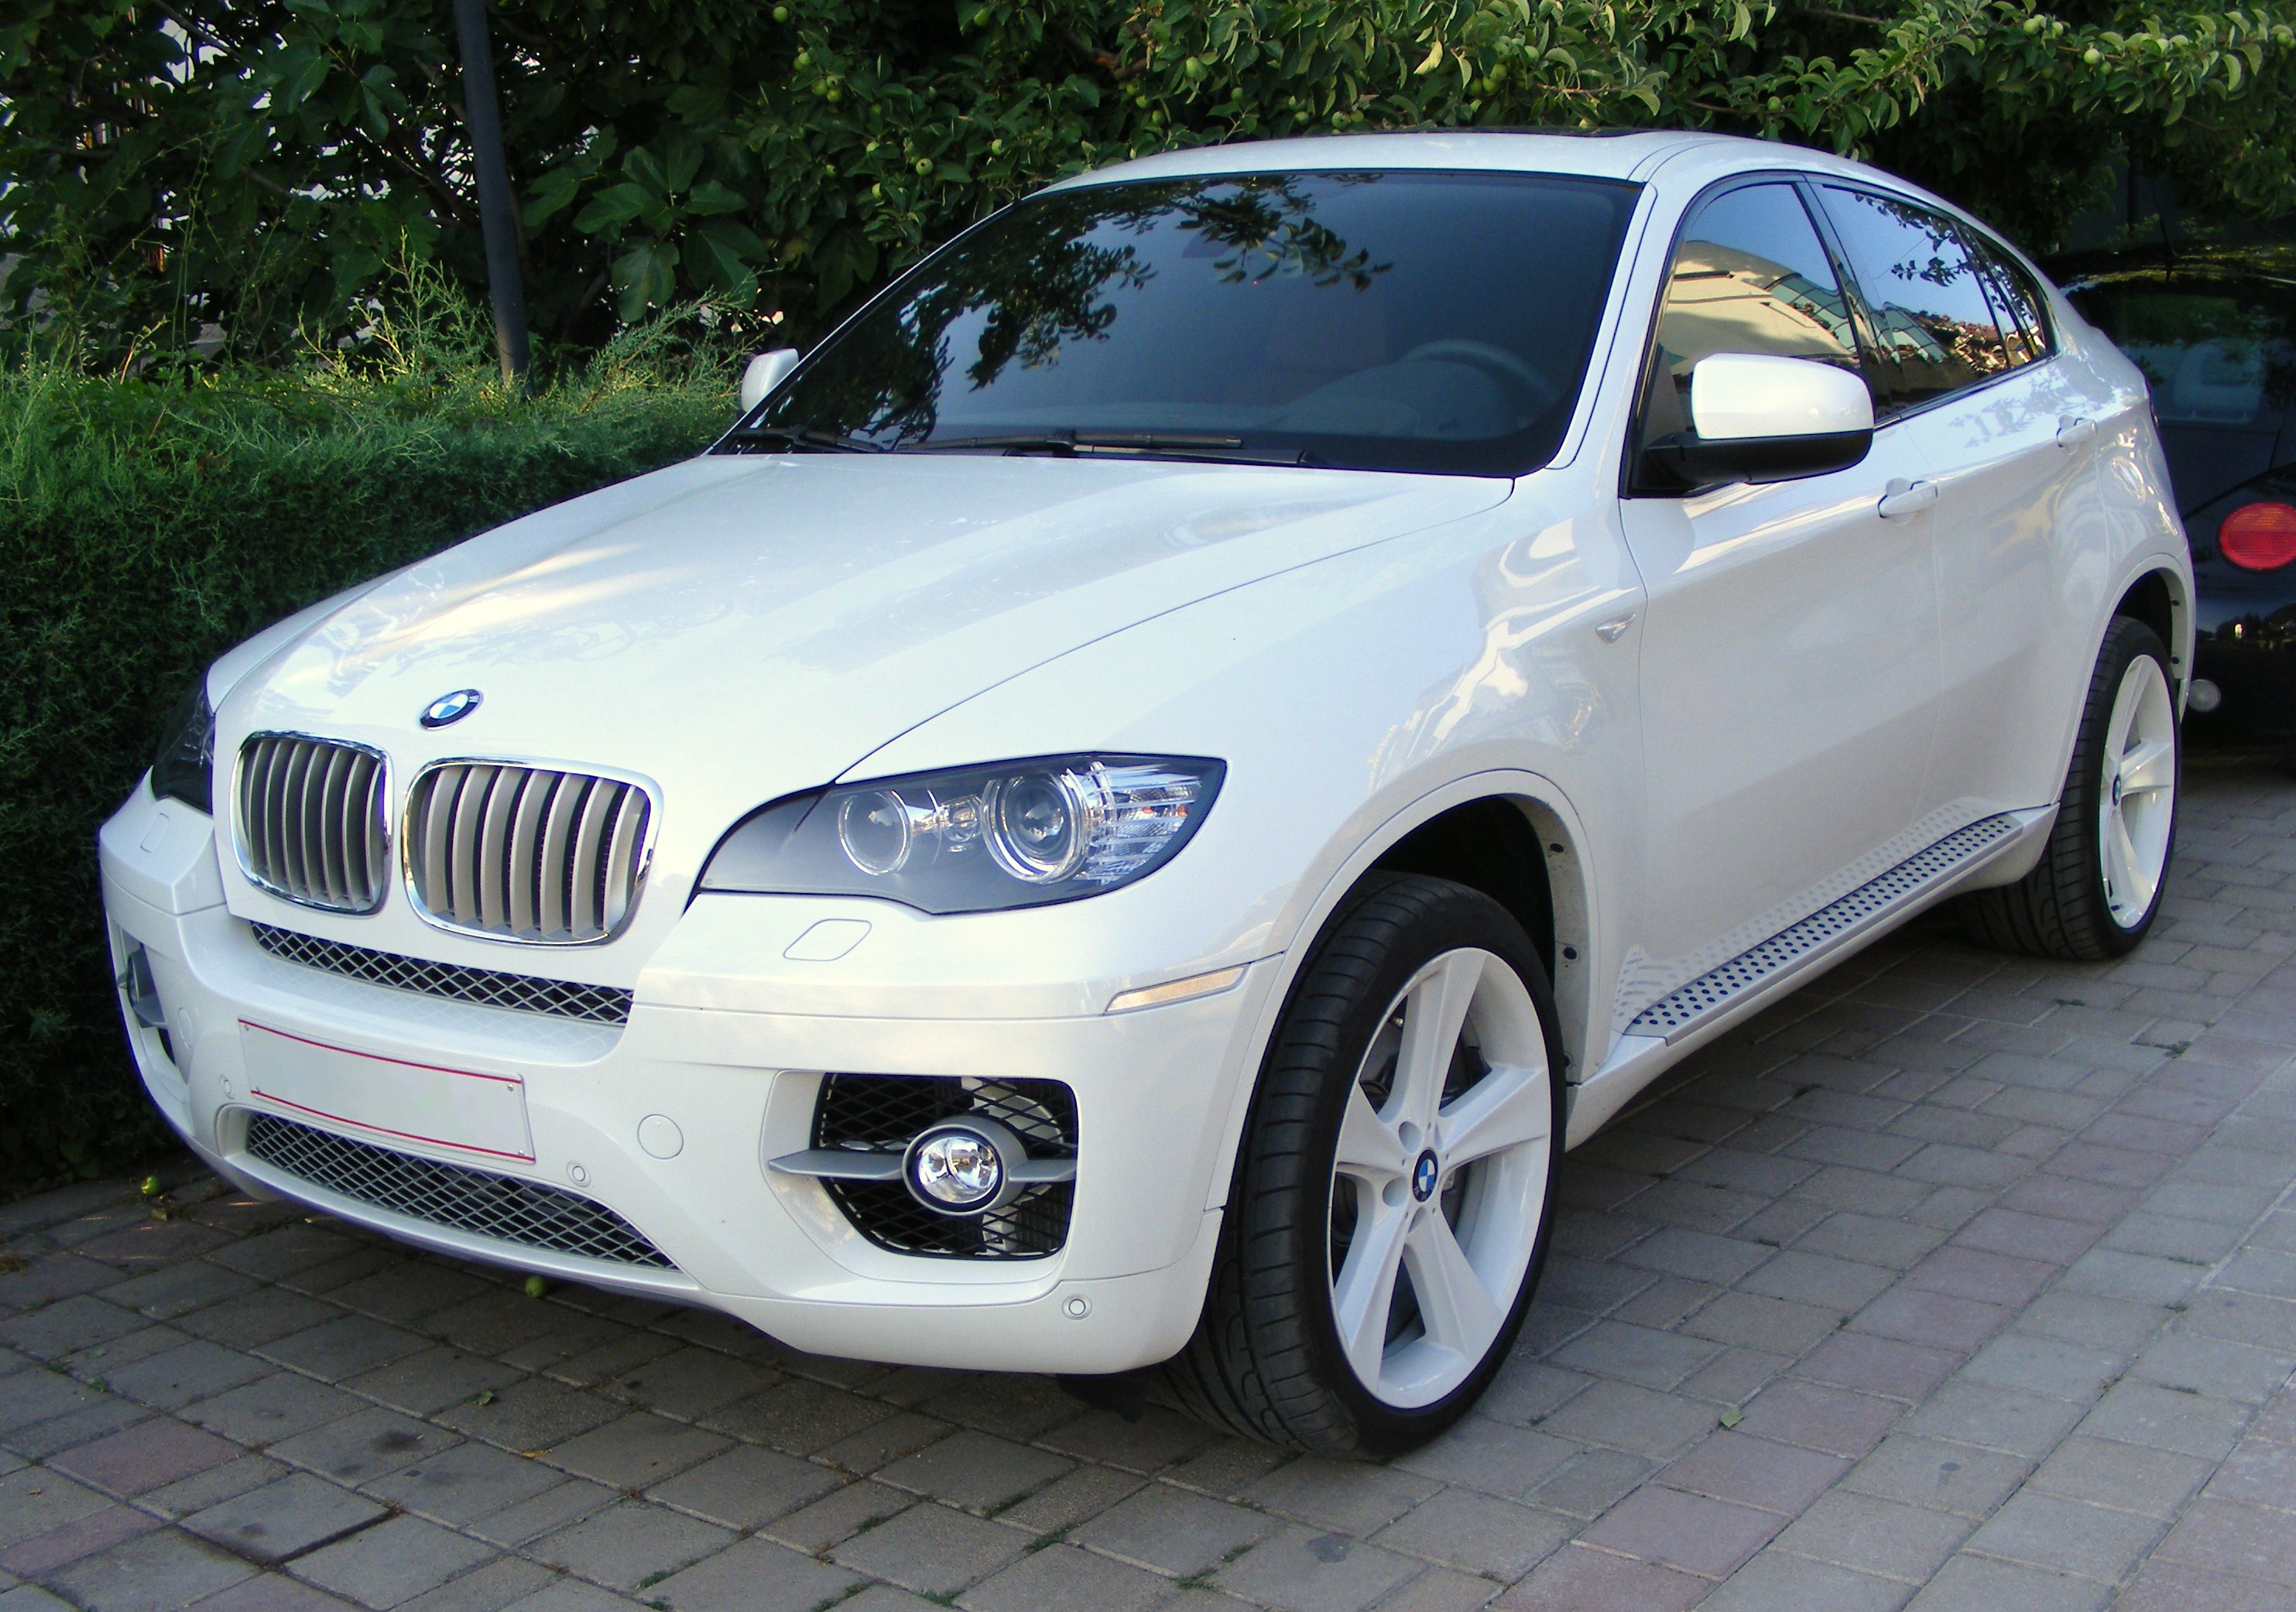 BMW X6 front